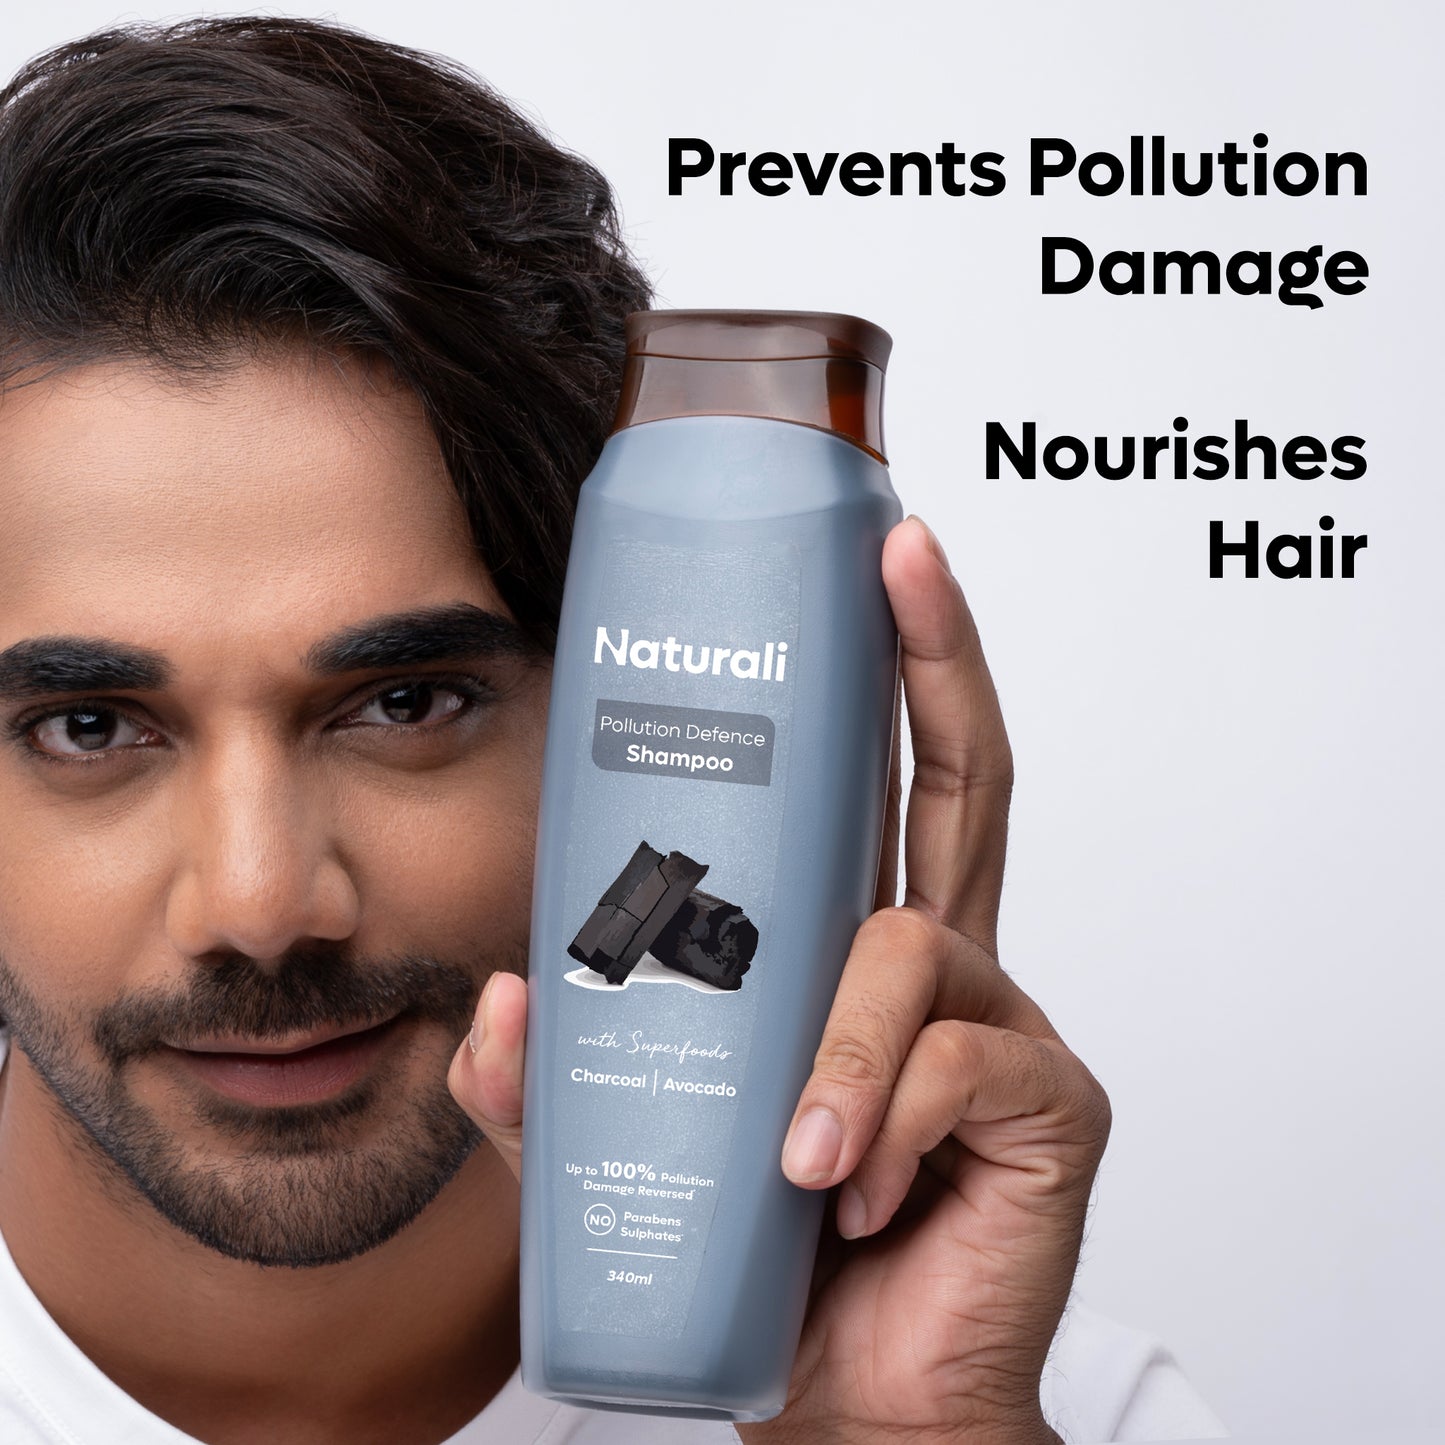 Pollution Defence Shampoo